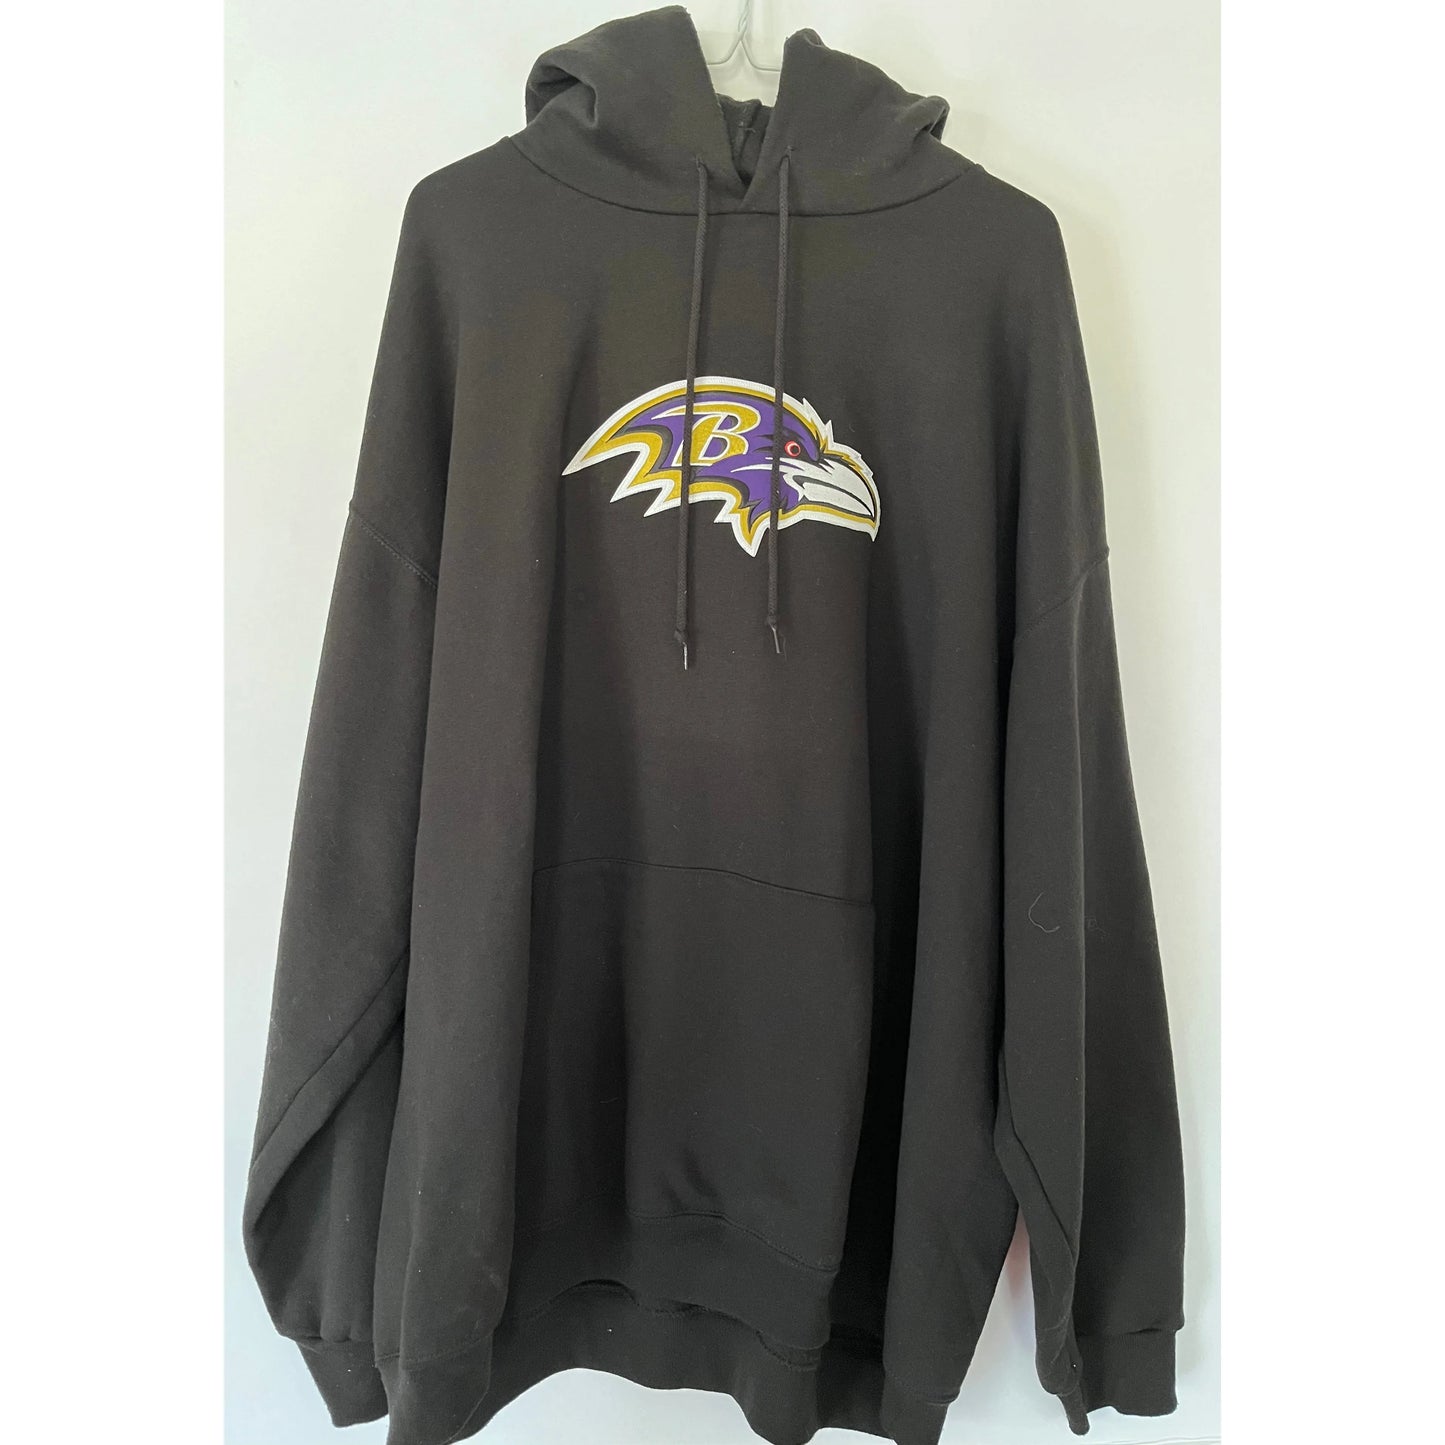 Baltimore Ravens - NFL - NFL Team Apparel Sweatshirt (XX-Large)